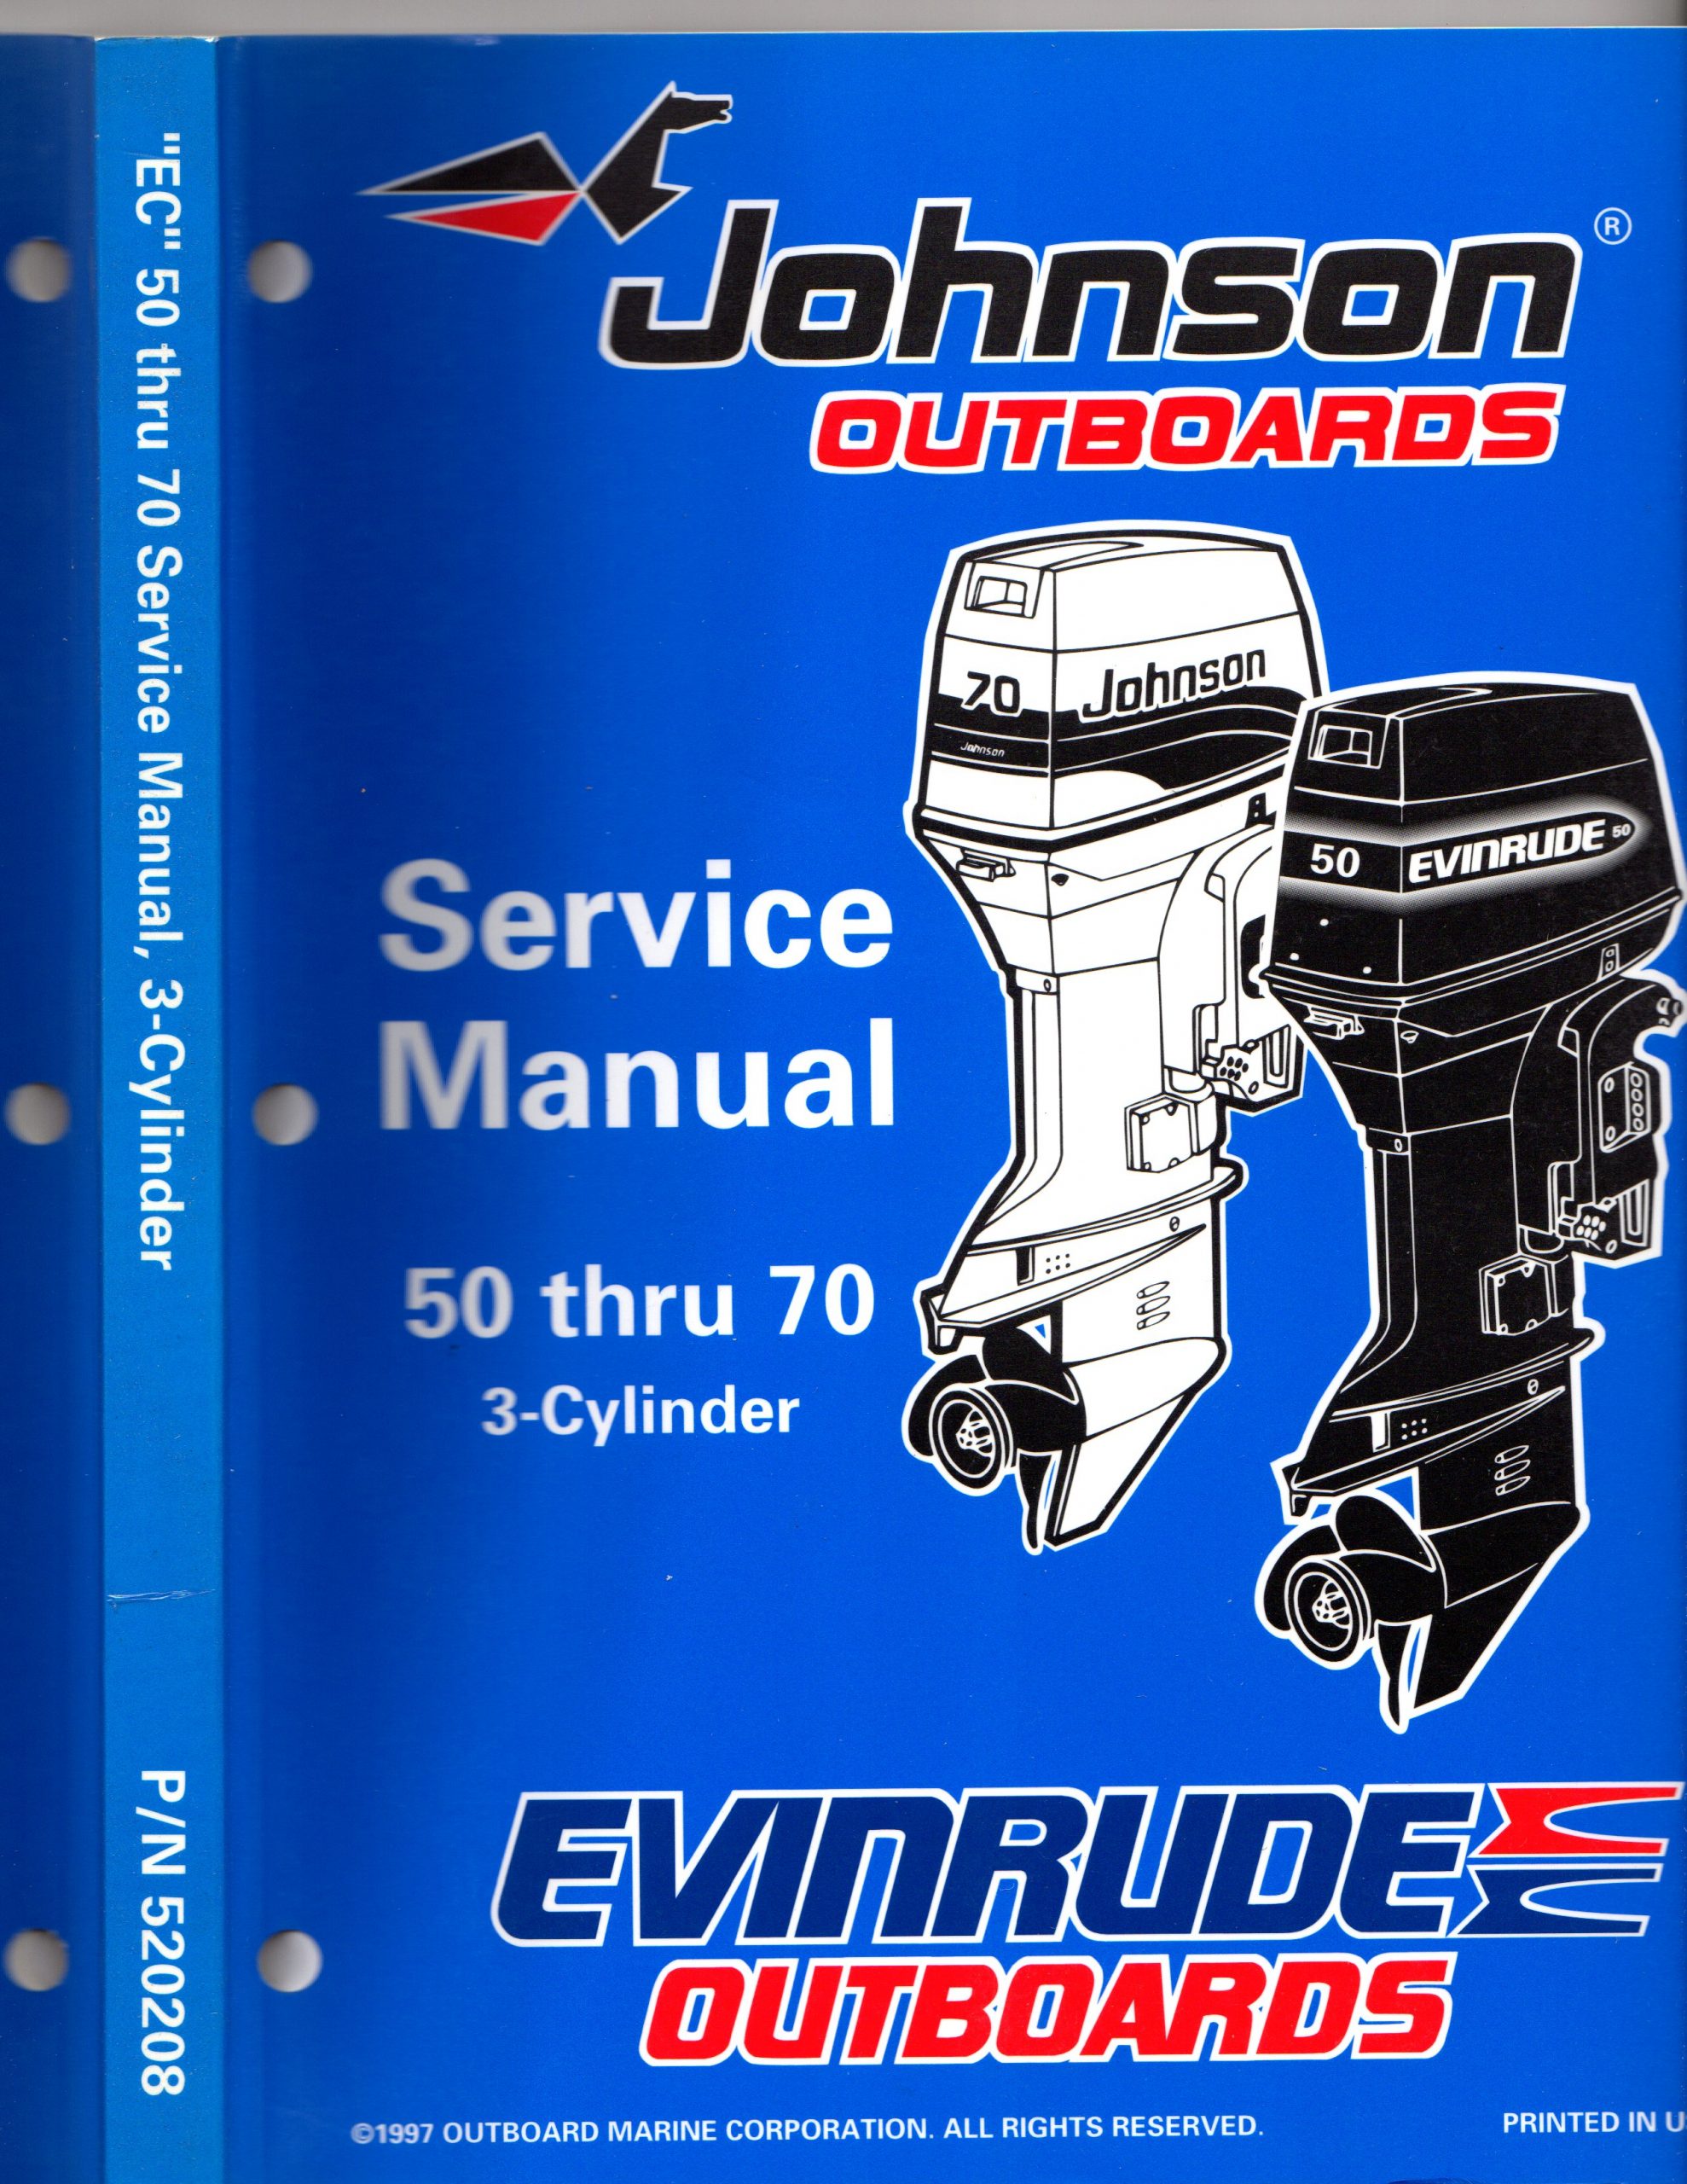 Used 1998 Johnson / Evinrude Service Manual 50 THRU 70 hp 3 Cylinder outboard models 520208